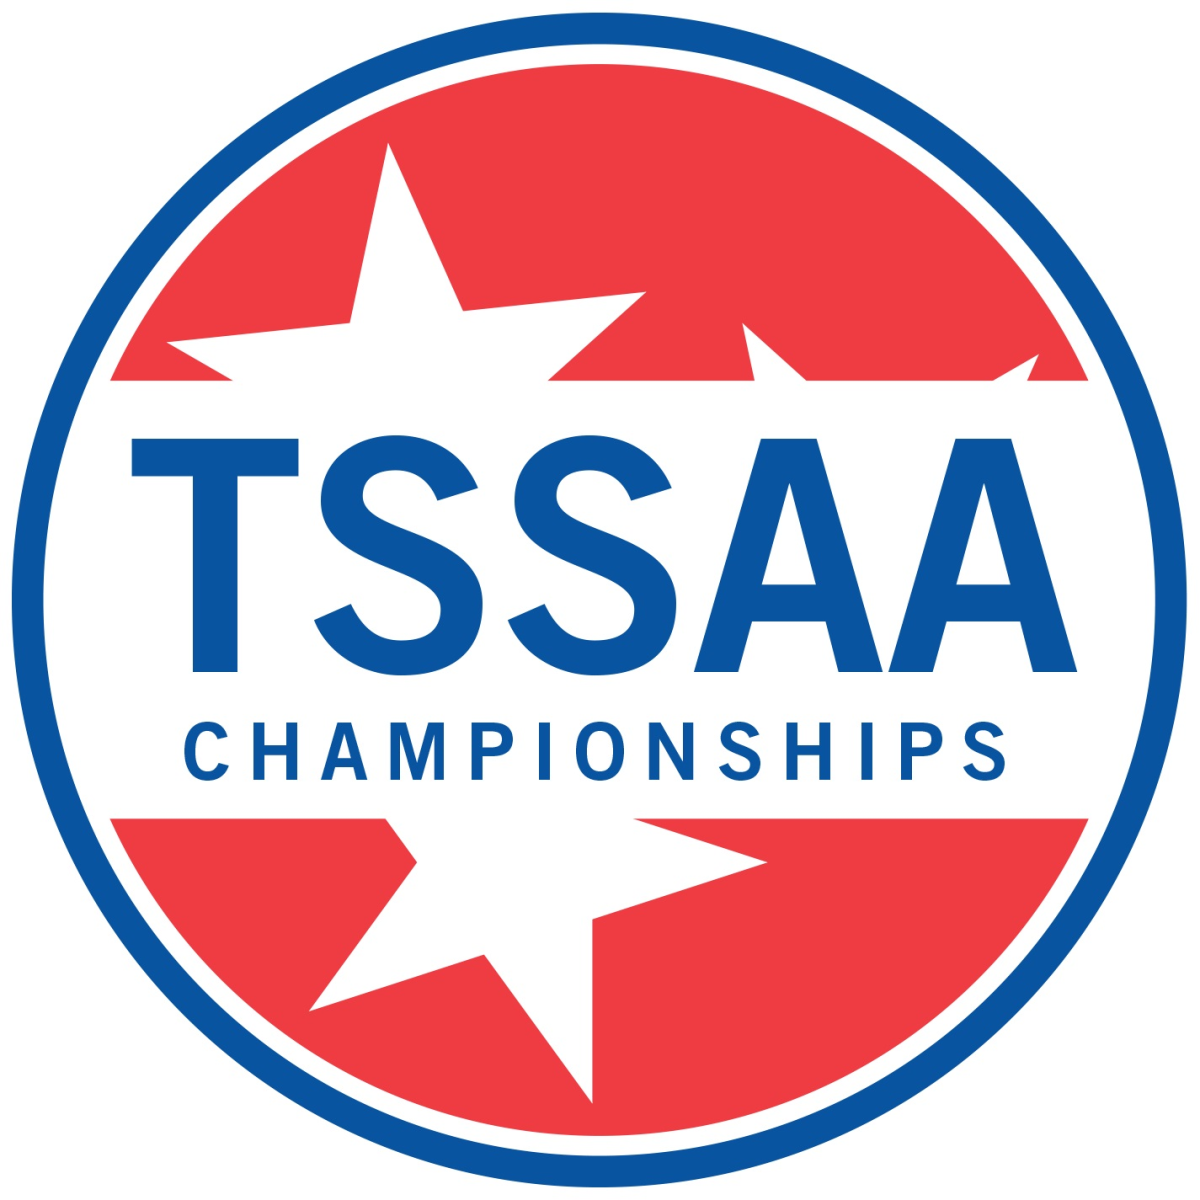 2021 TSSAA State Championships Chattanooga